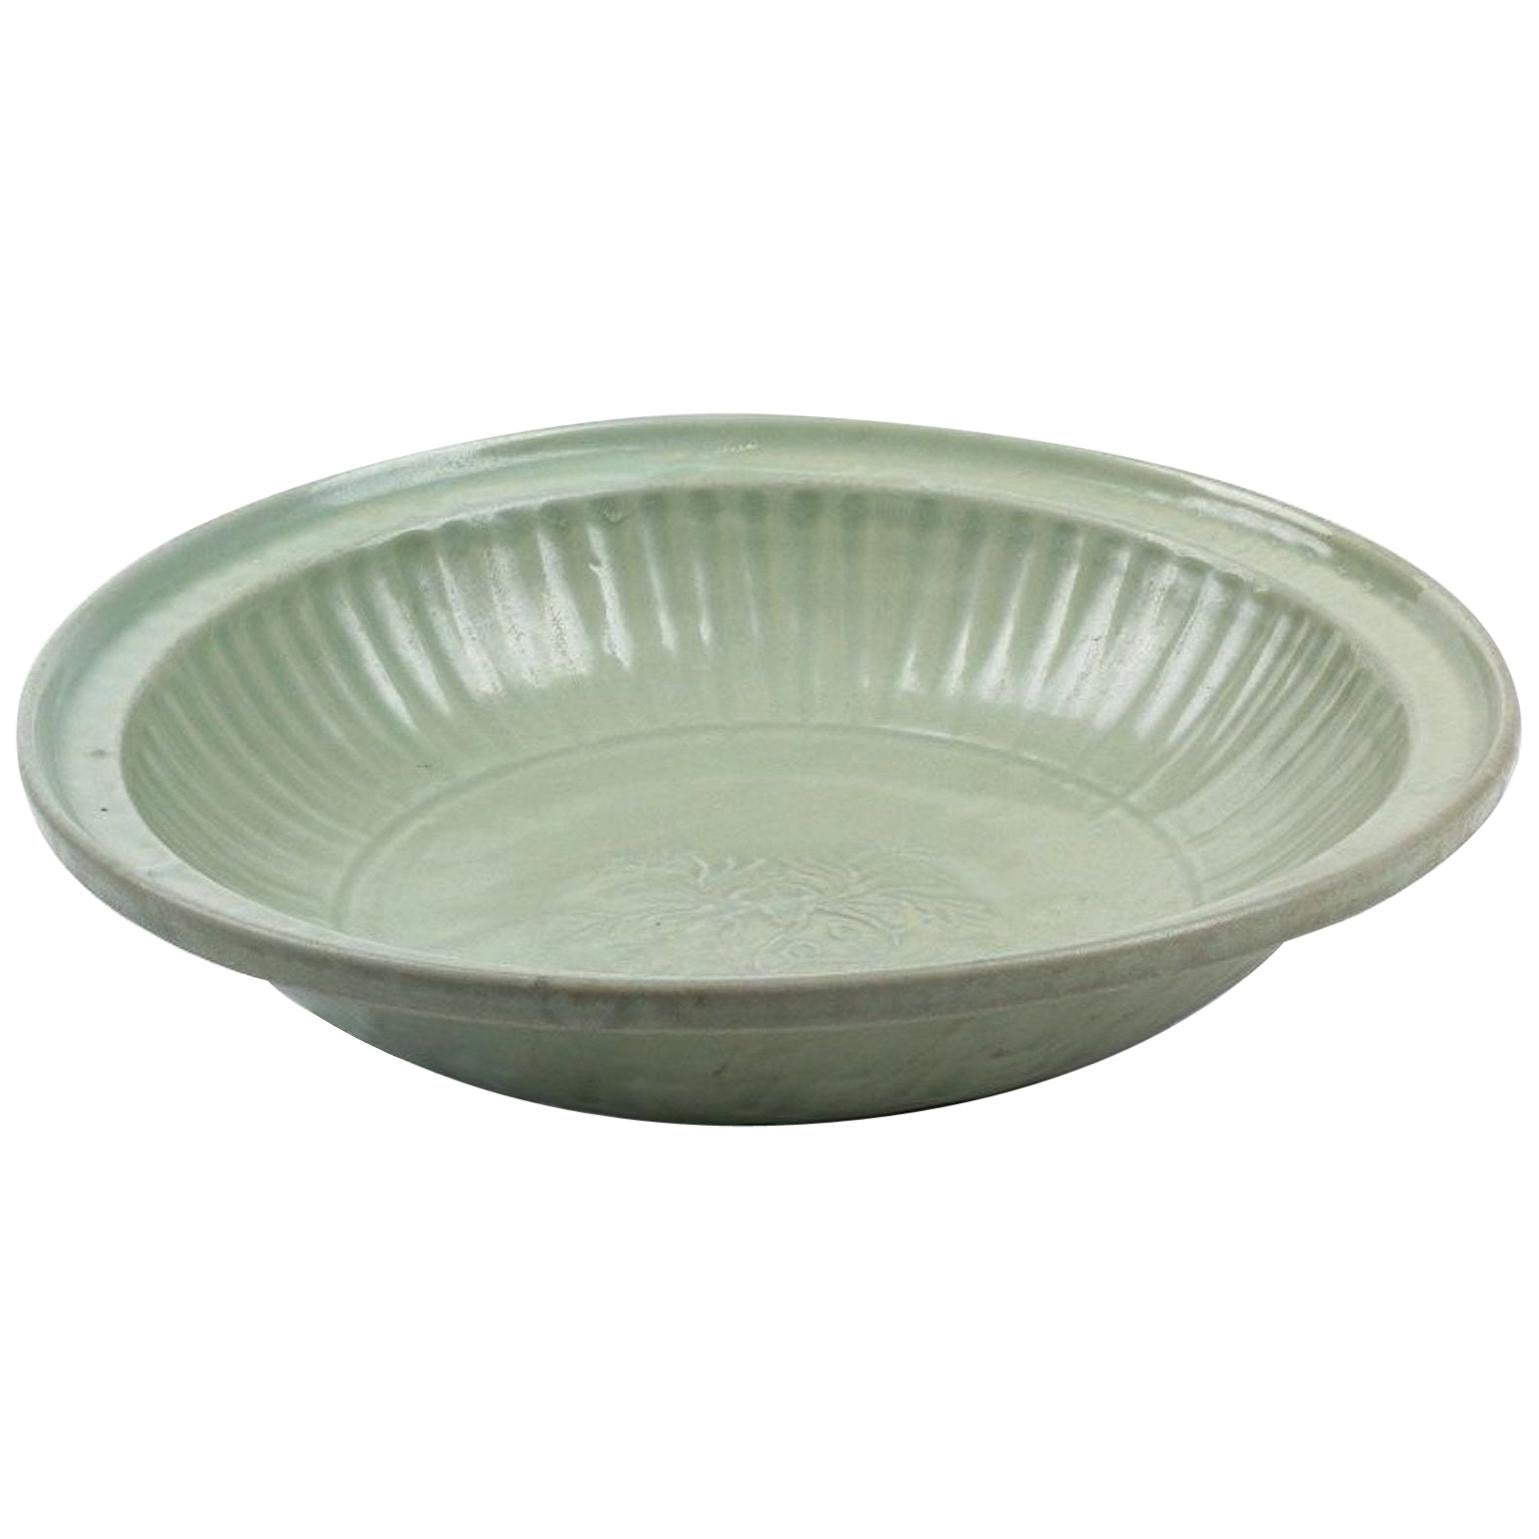 Ancient Glazed Ceramic Dish, Ming Dynasty China